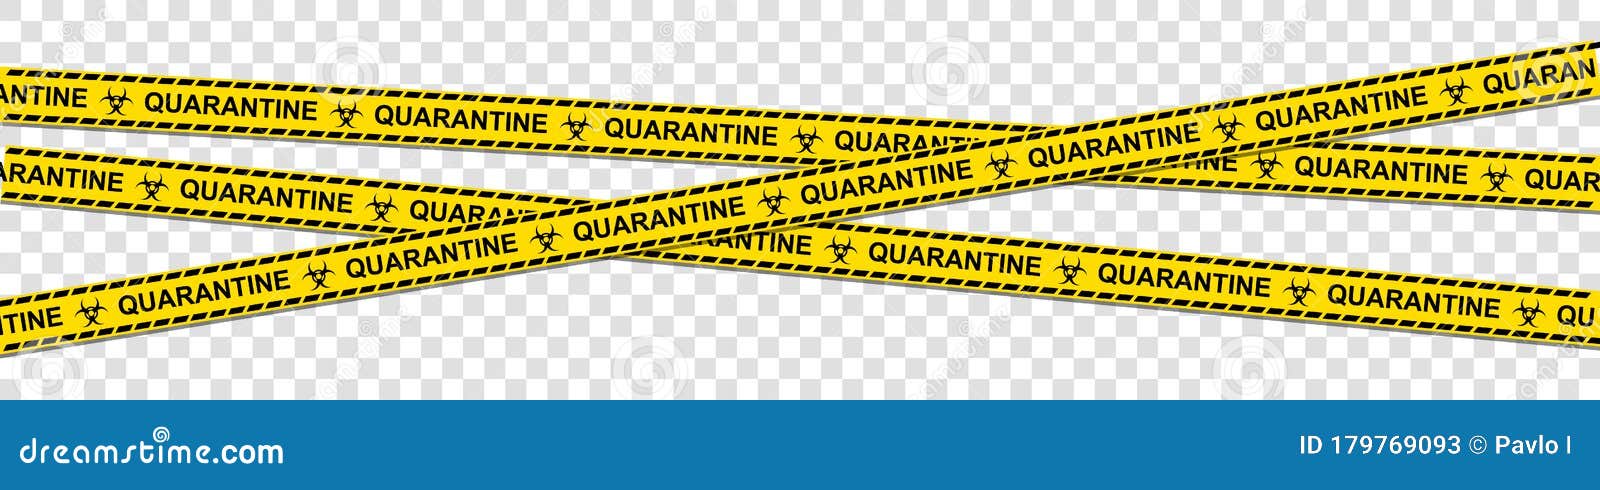 quarantine warning tape, precaution, attention, alert. protection against dangerous virus. healthcare medicine protected concept